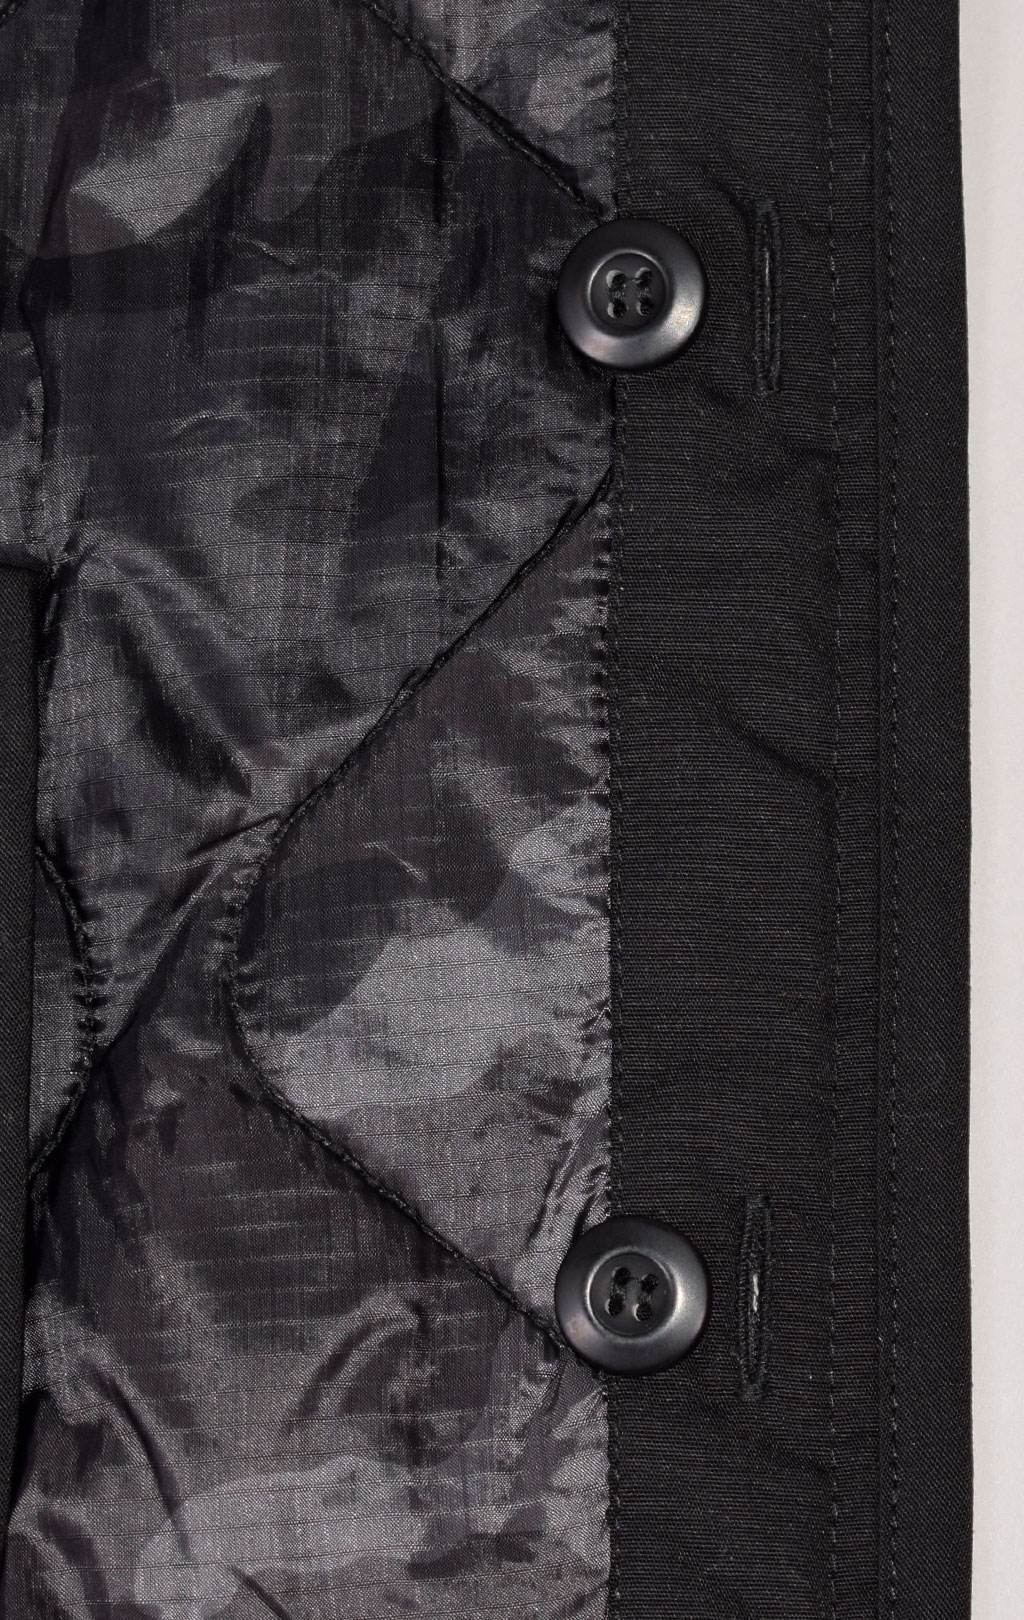 Куртка-подстёжка ALPHA INDUSTRIES с карманами и манжетами CLASSIC M-65 FW 21/22 m black woodland camo 